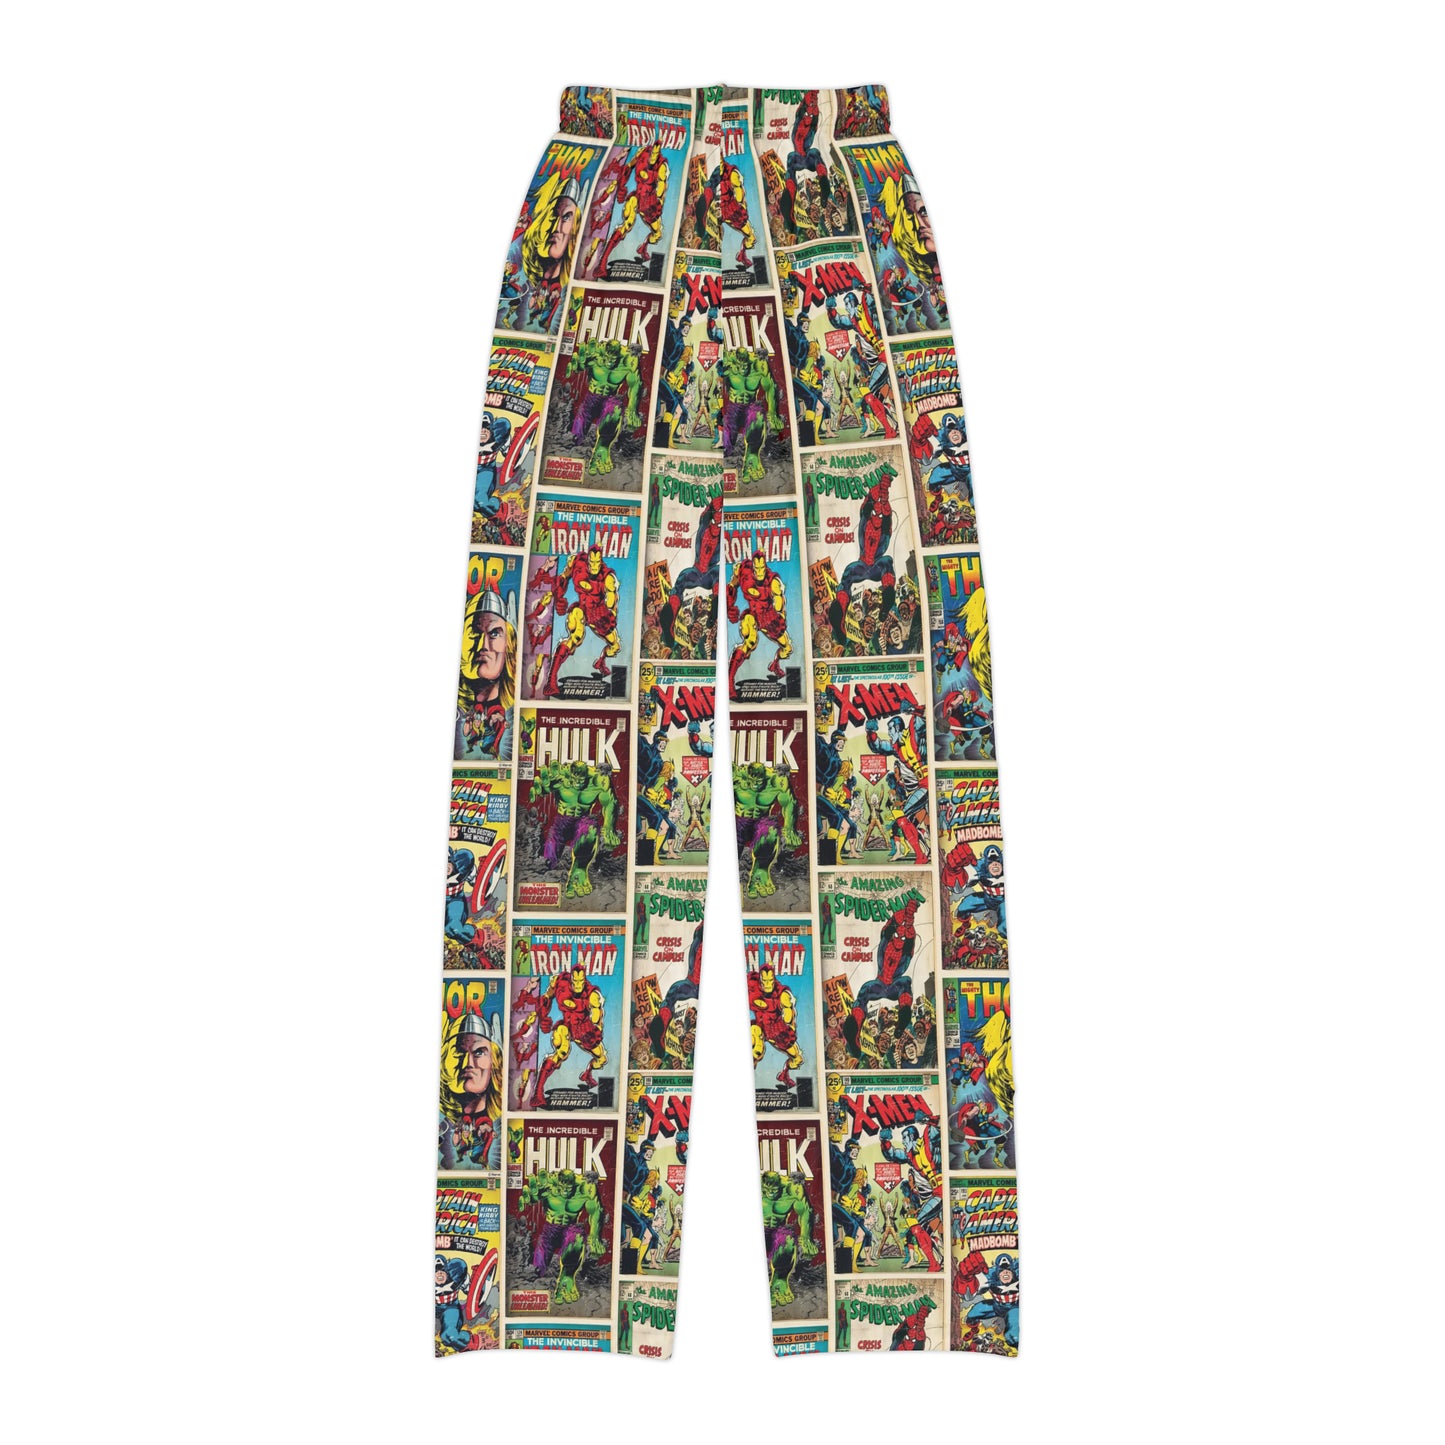 Marvel Comic Book Cover Collage Kids Pajama Pants